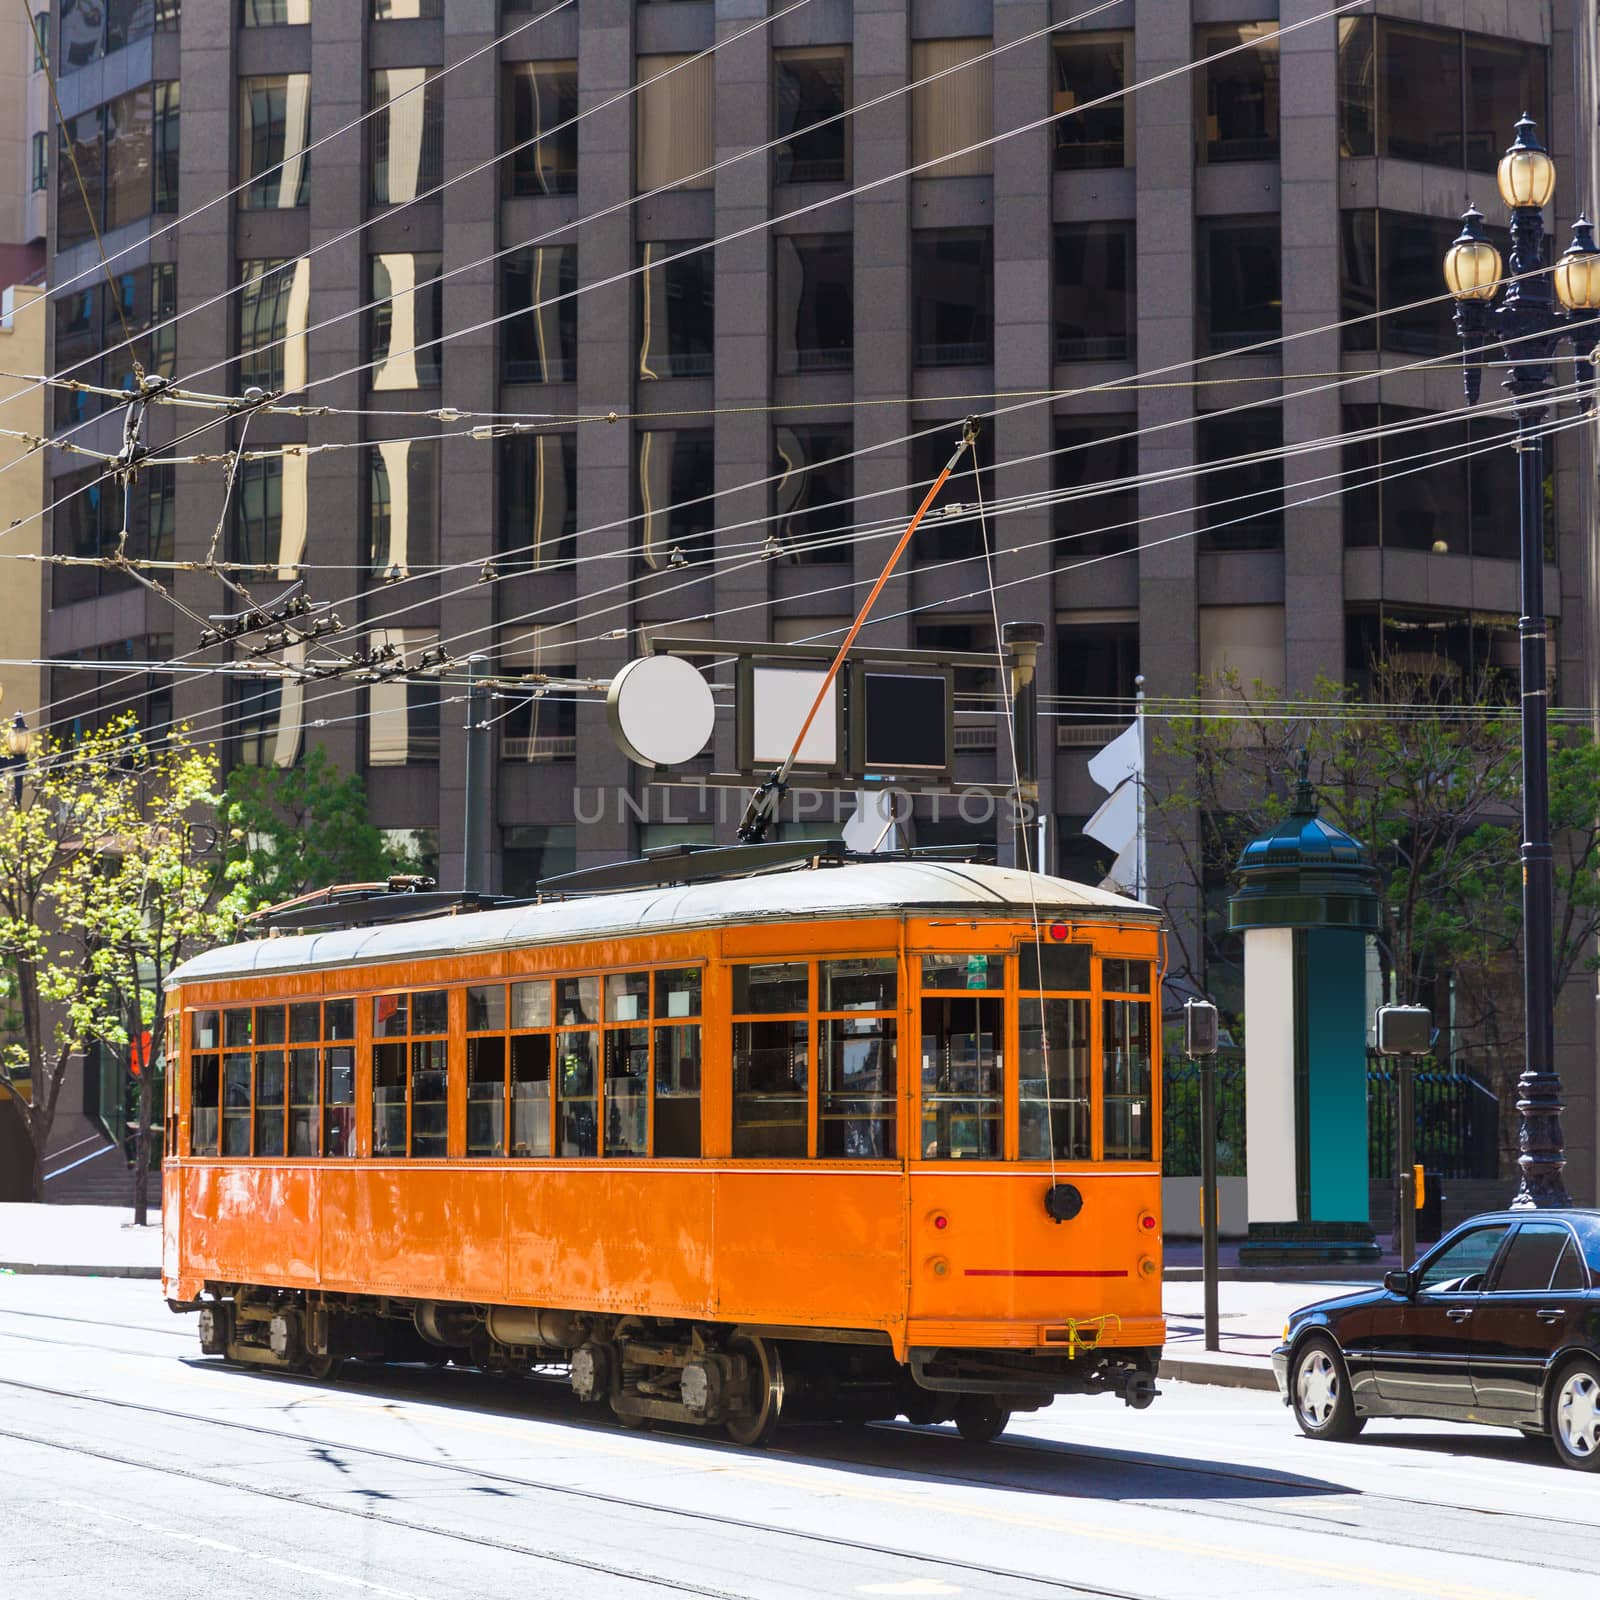 San Francisco Cable car Tram in Market Street California by lunamarina